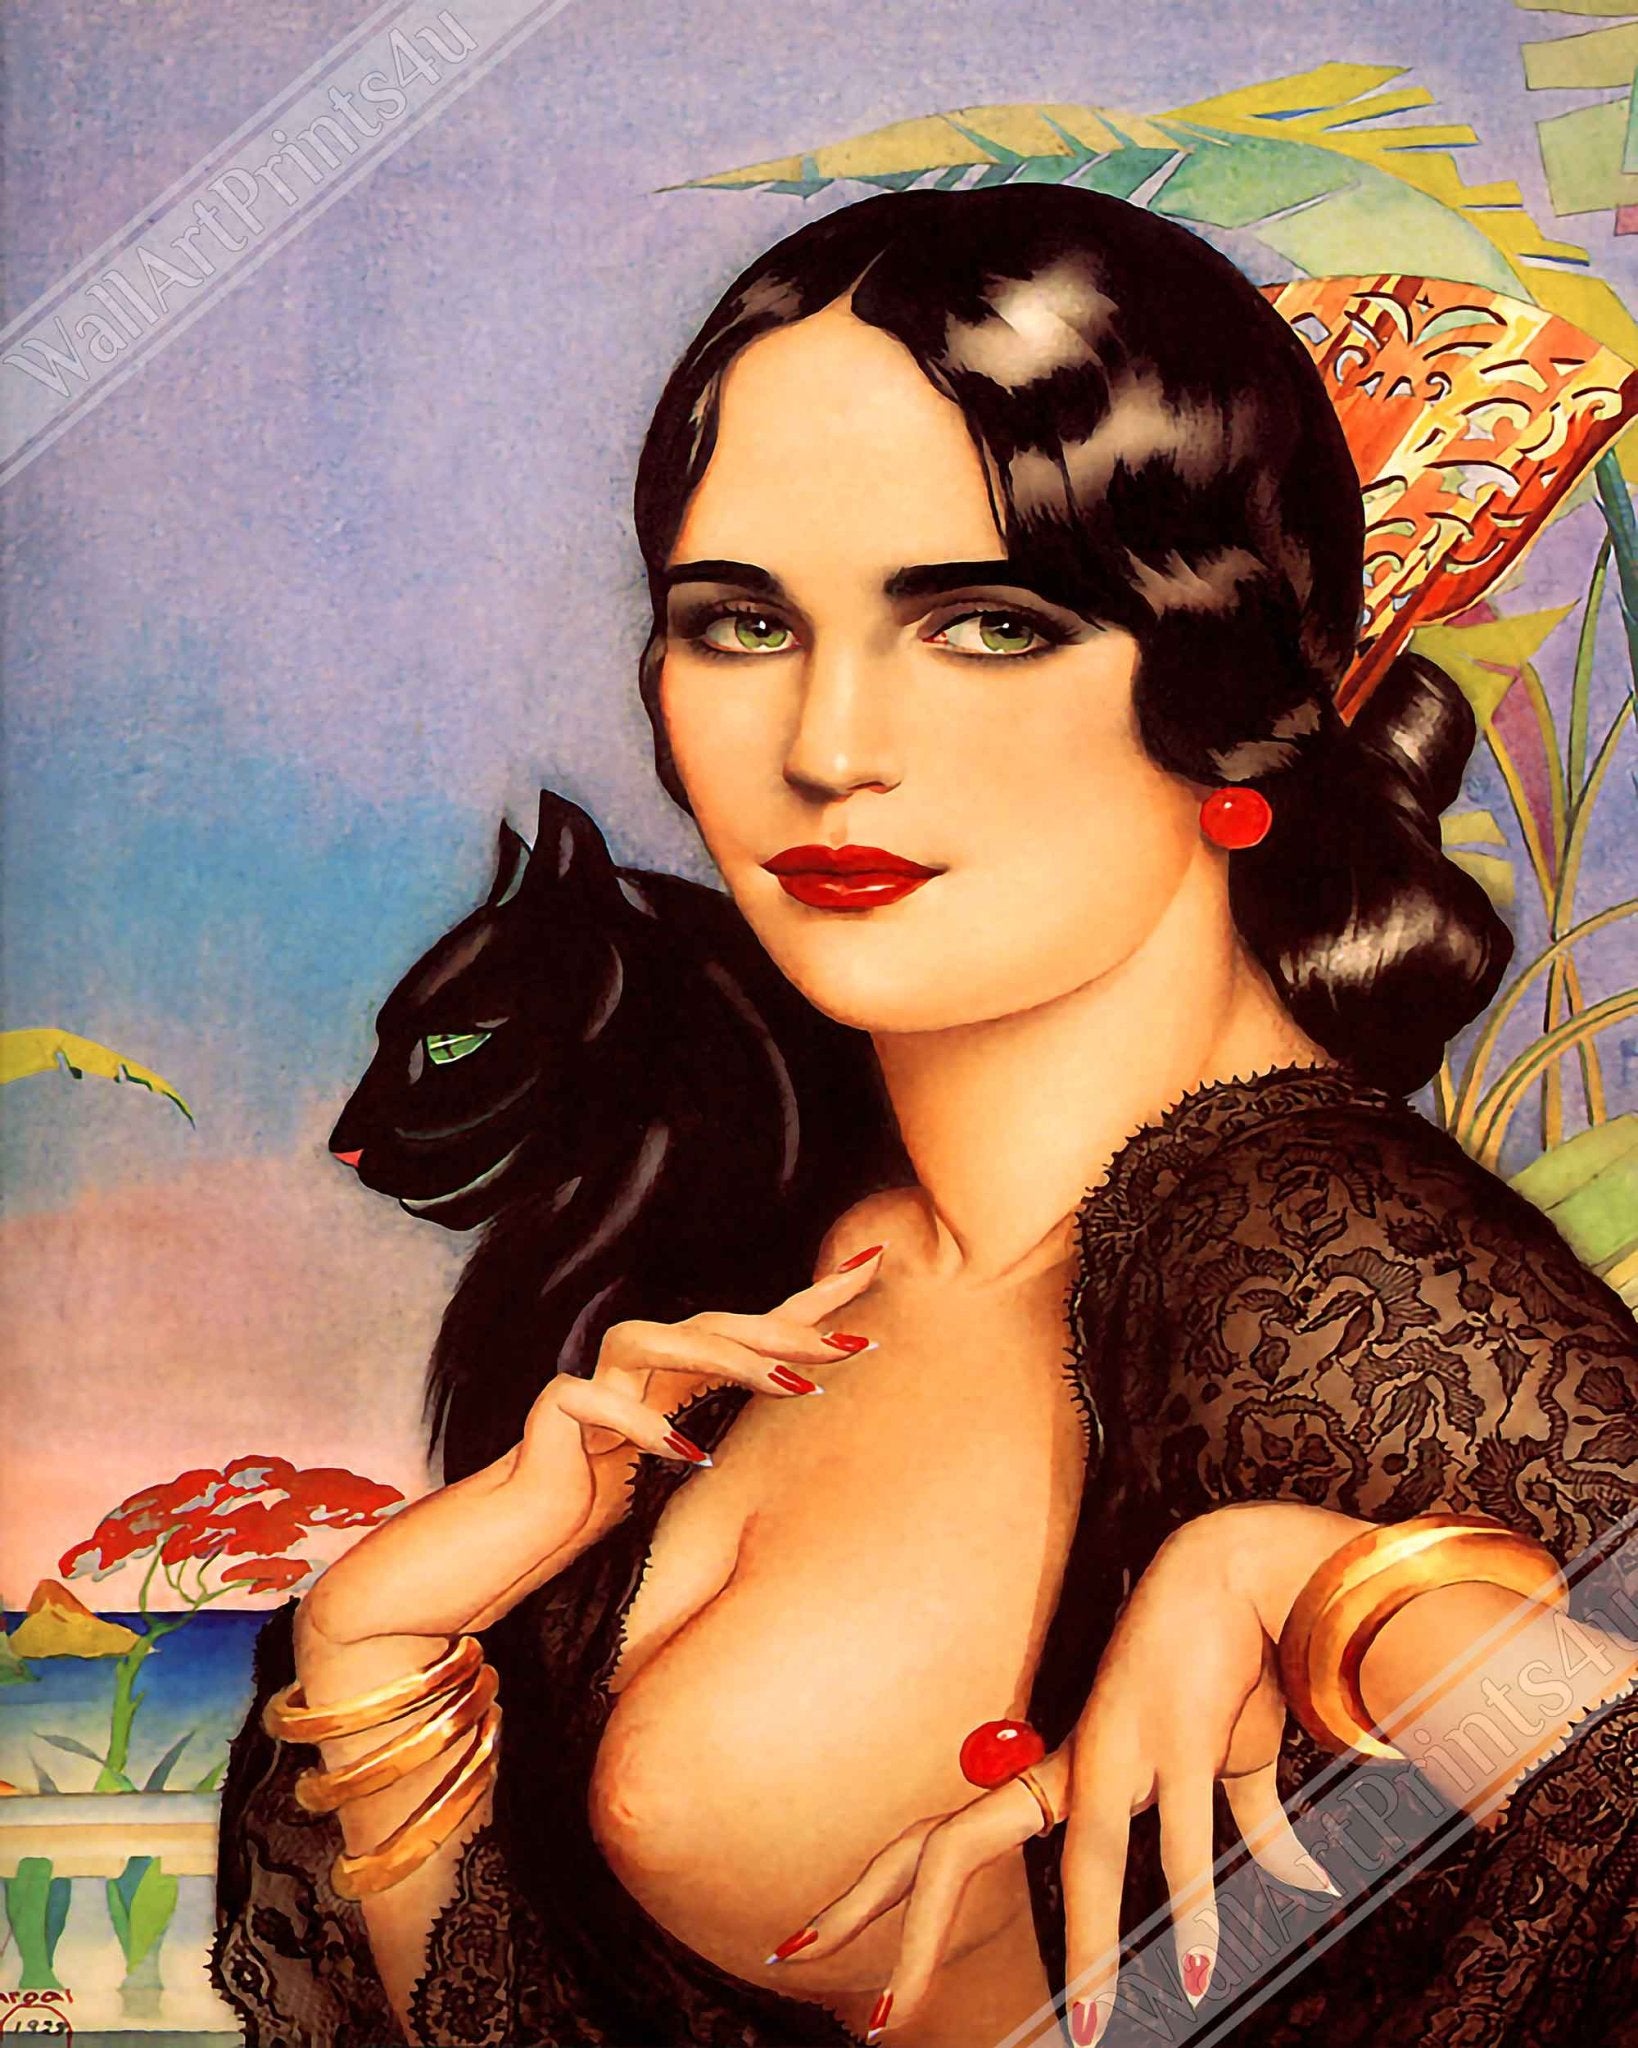 Vintage Pin Up Girl Poster, Alberto Vargas, Spanish Gypsy Black Cat - Vintage Art - Retro Pin Up Girl Print - 1928 - WallArtPrints4U